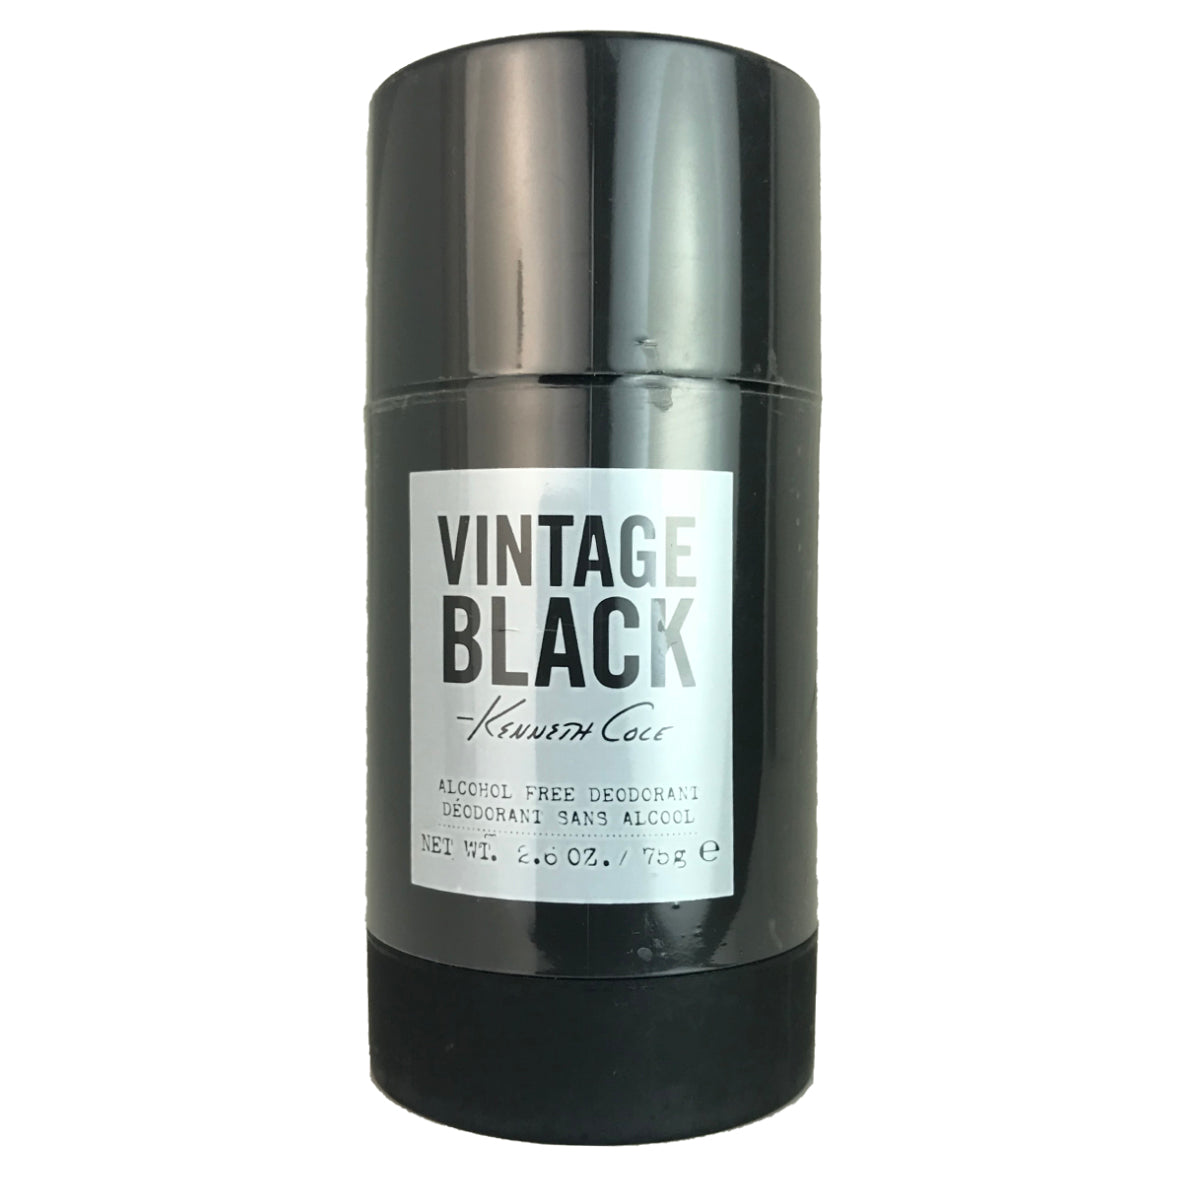 Black Vintage For Men by Kenneth Cole 2.5 oz Deodorant Stick